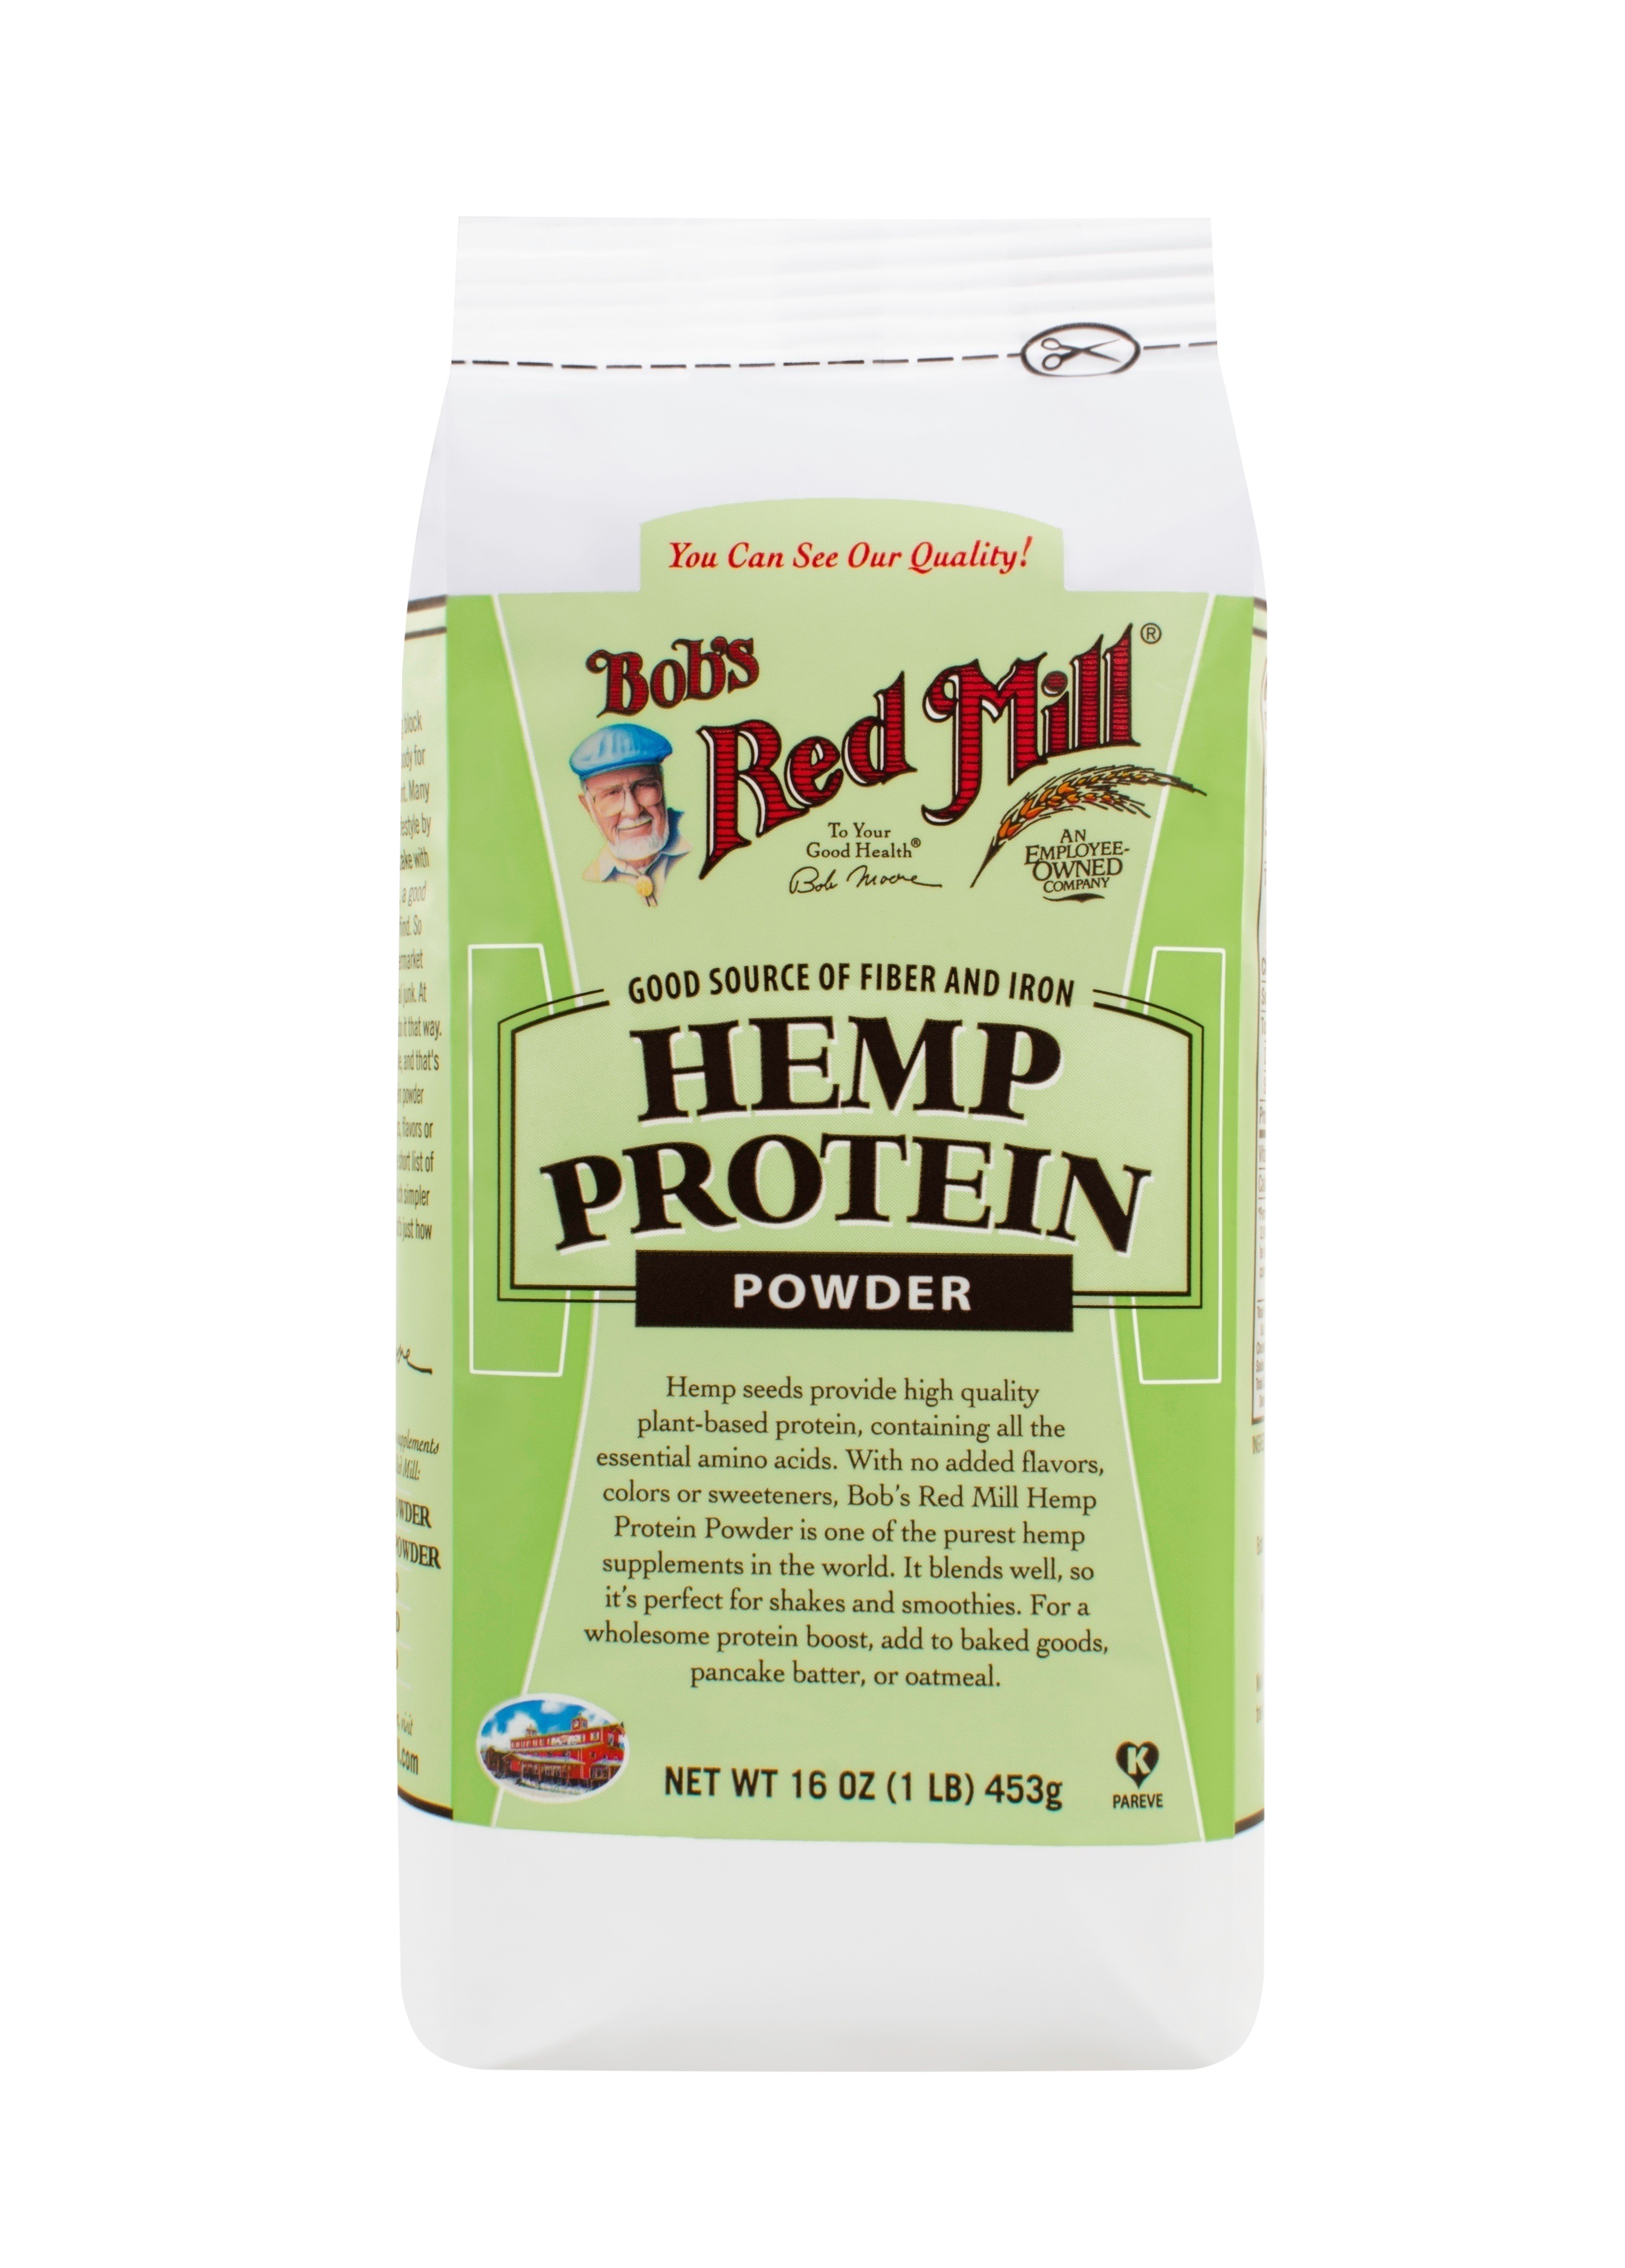 Bobs Red Mill Hemp Protein Powder, 16 Oz - image 1 of 2